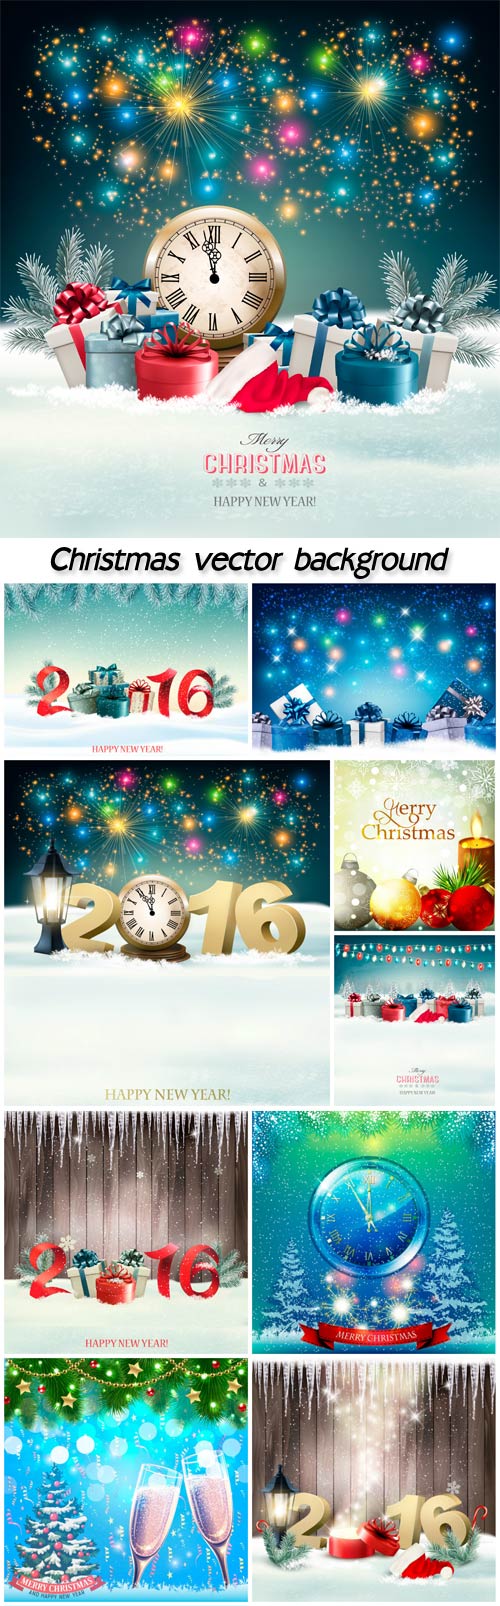 Christmas, winter beautiful vector backgrounds